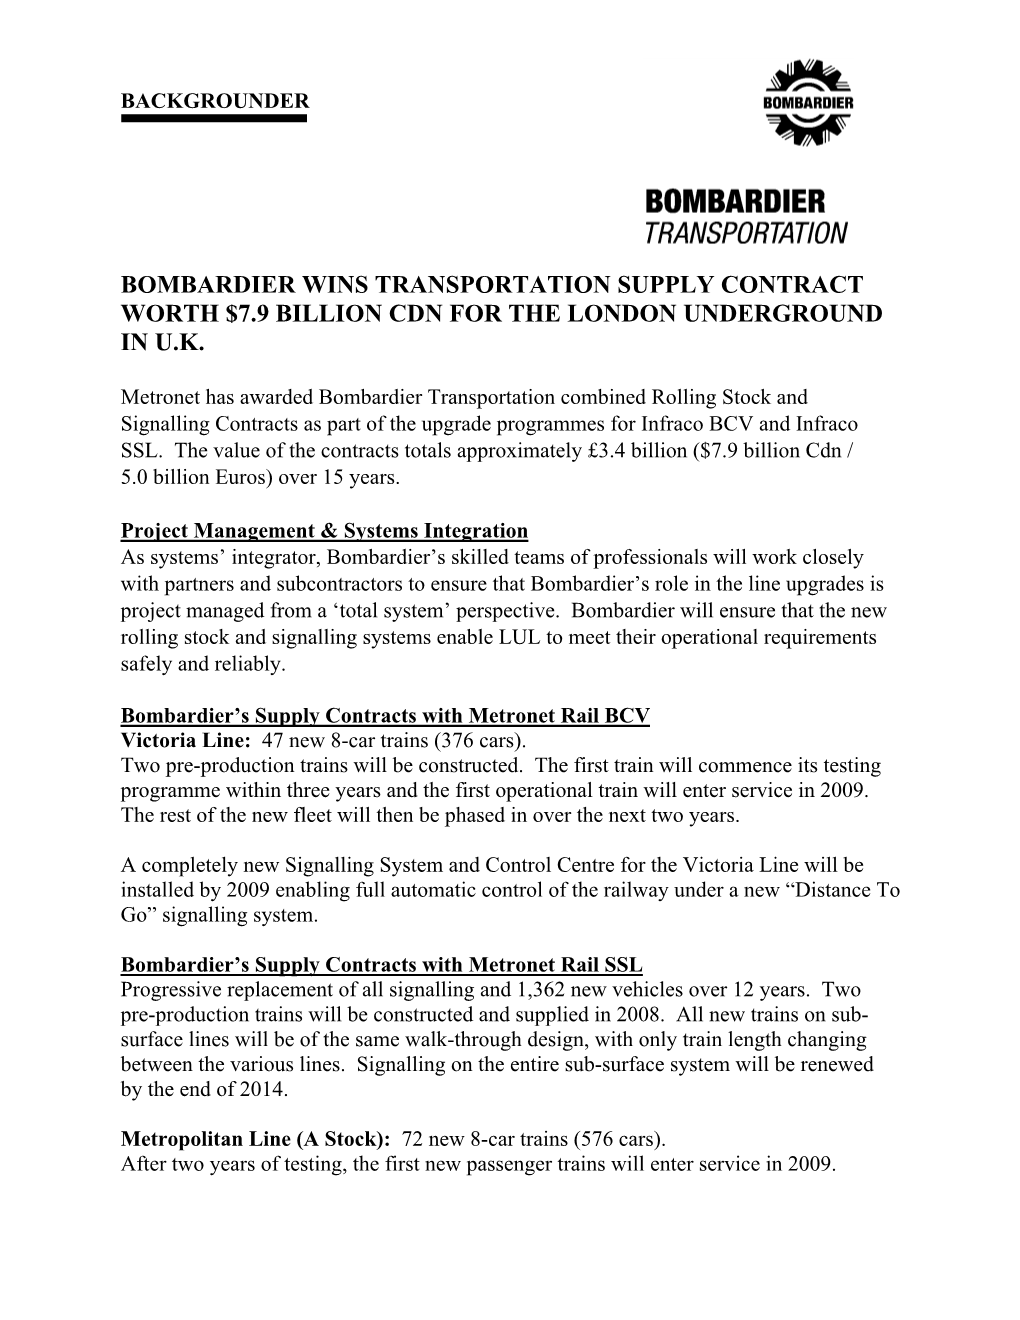 Bombardier Wins Transportation Supply Contract Worth $7.9 Billion Cdn for the London Underground in U.K